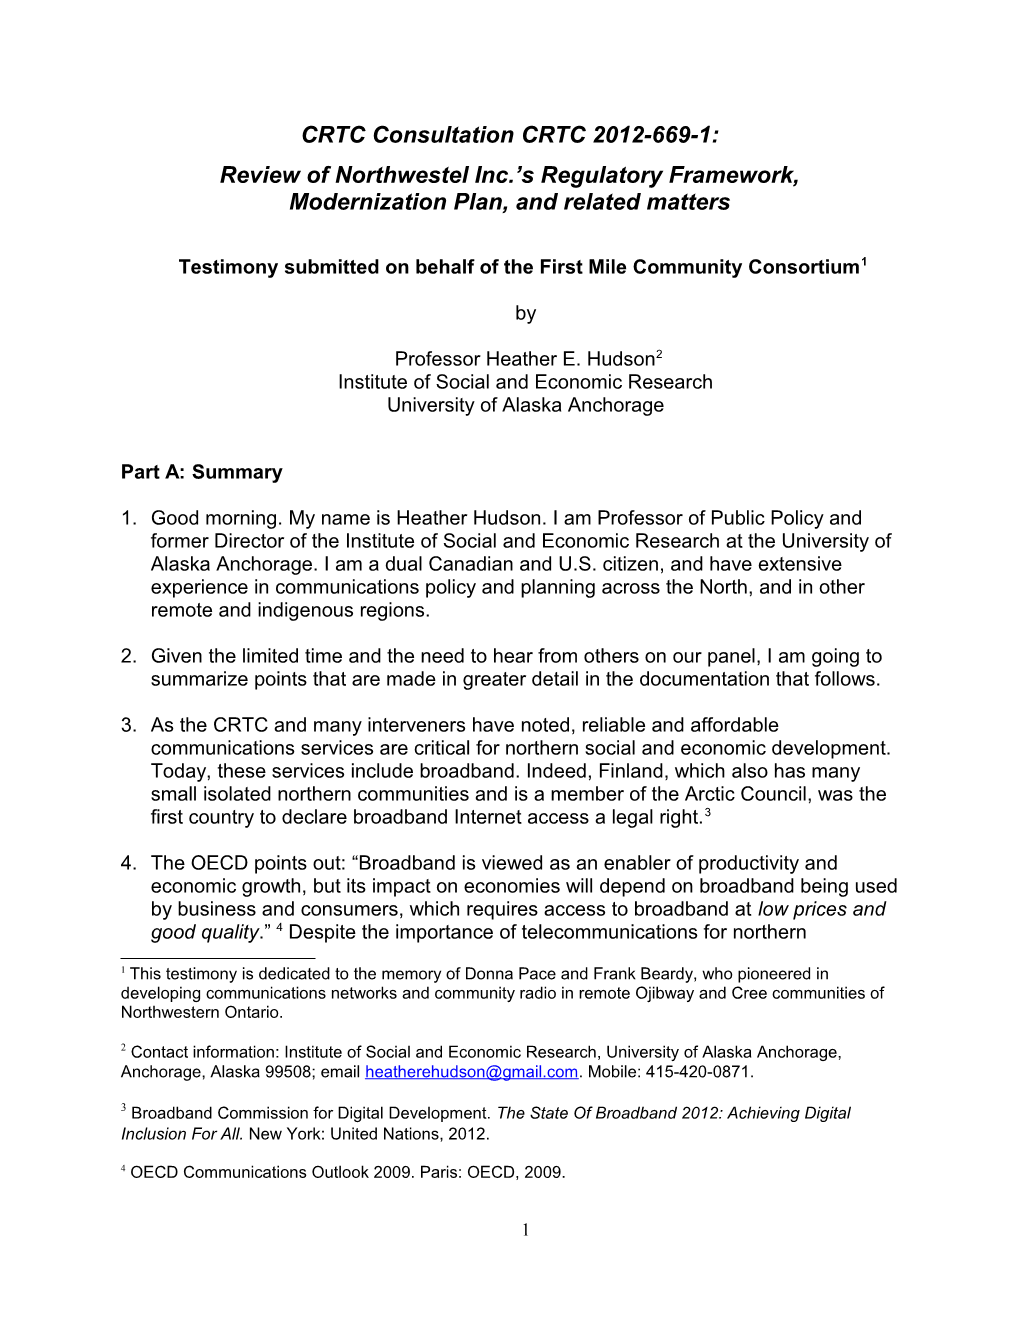 Review of Northwestel Inc. S Regulatory Framework